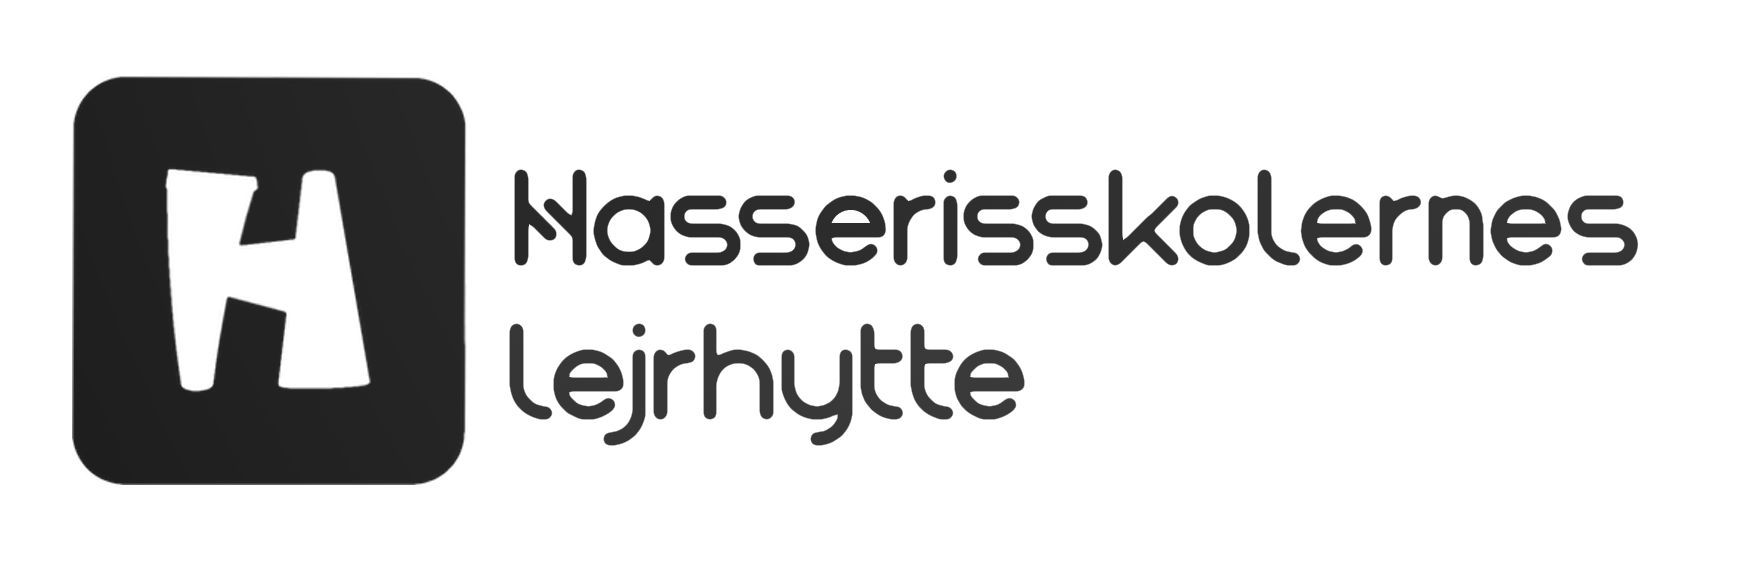 Hasserisskolernes Lejerhytte Logo